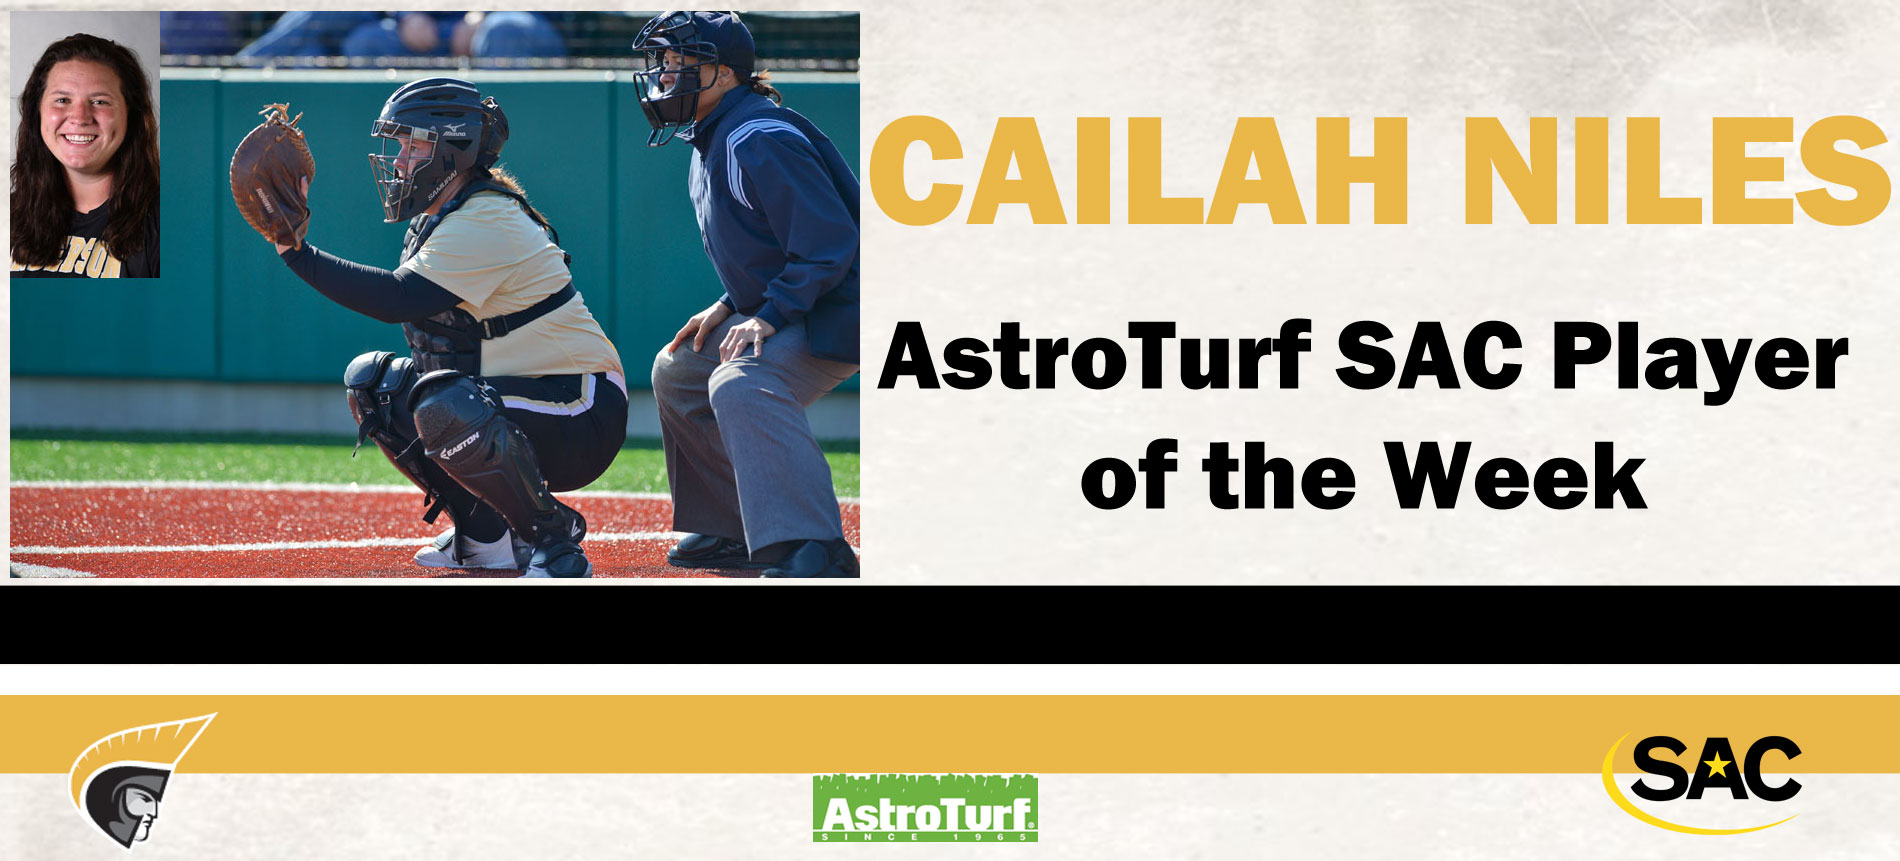 Niles Earns AstroTurf SAC Softball Player of the Week Honors